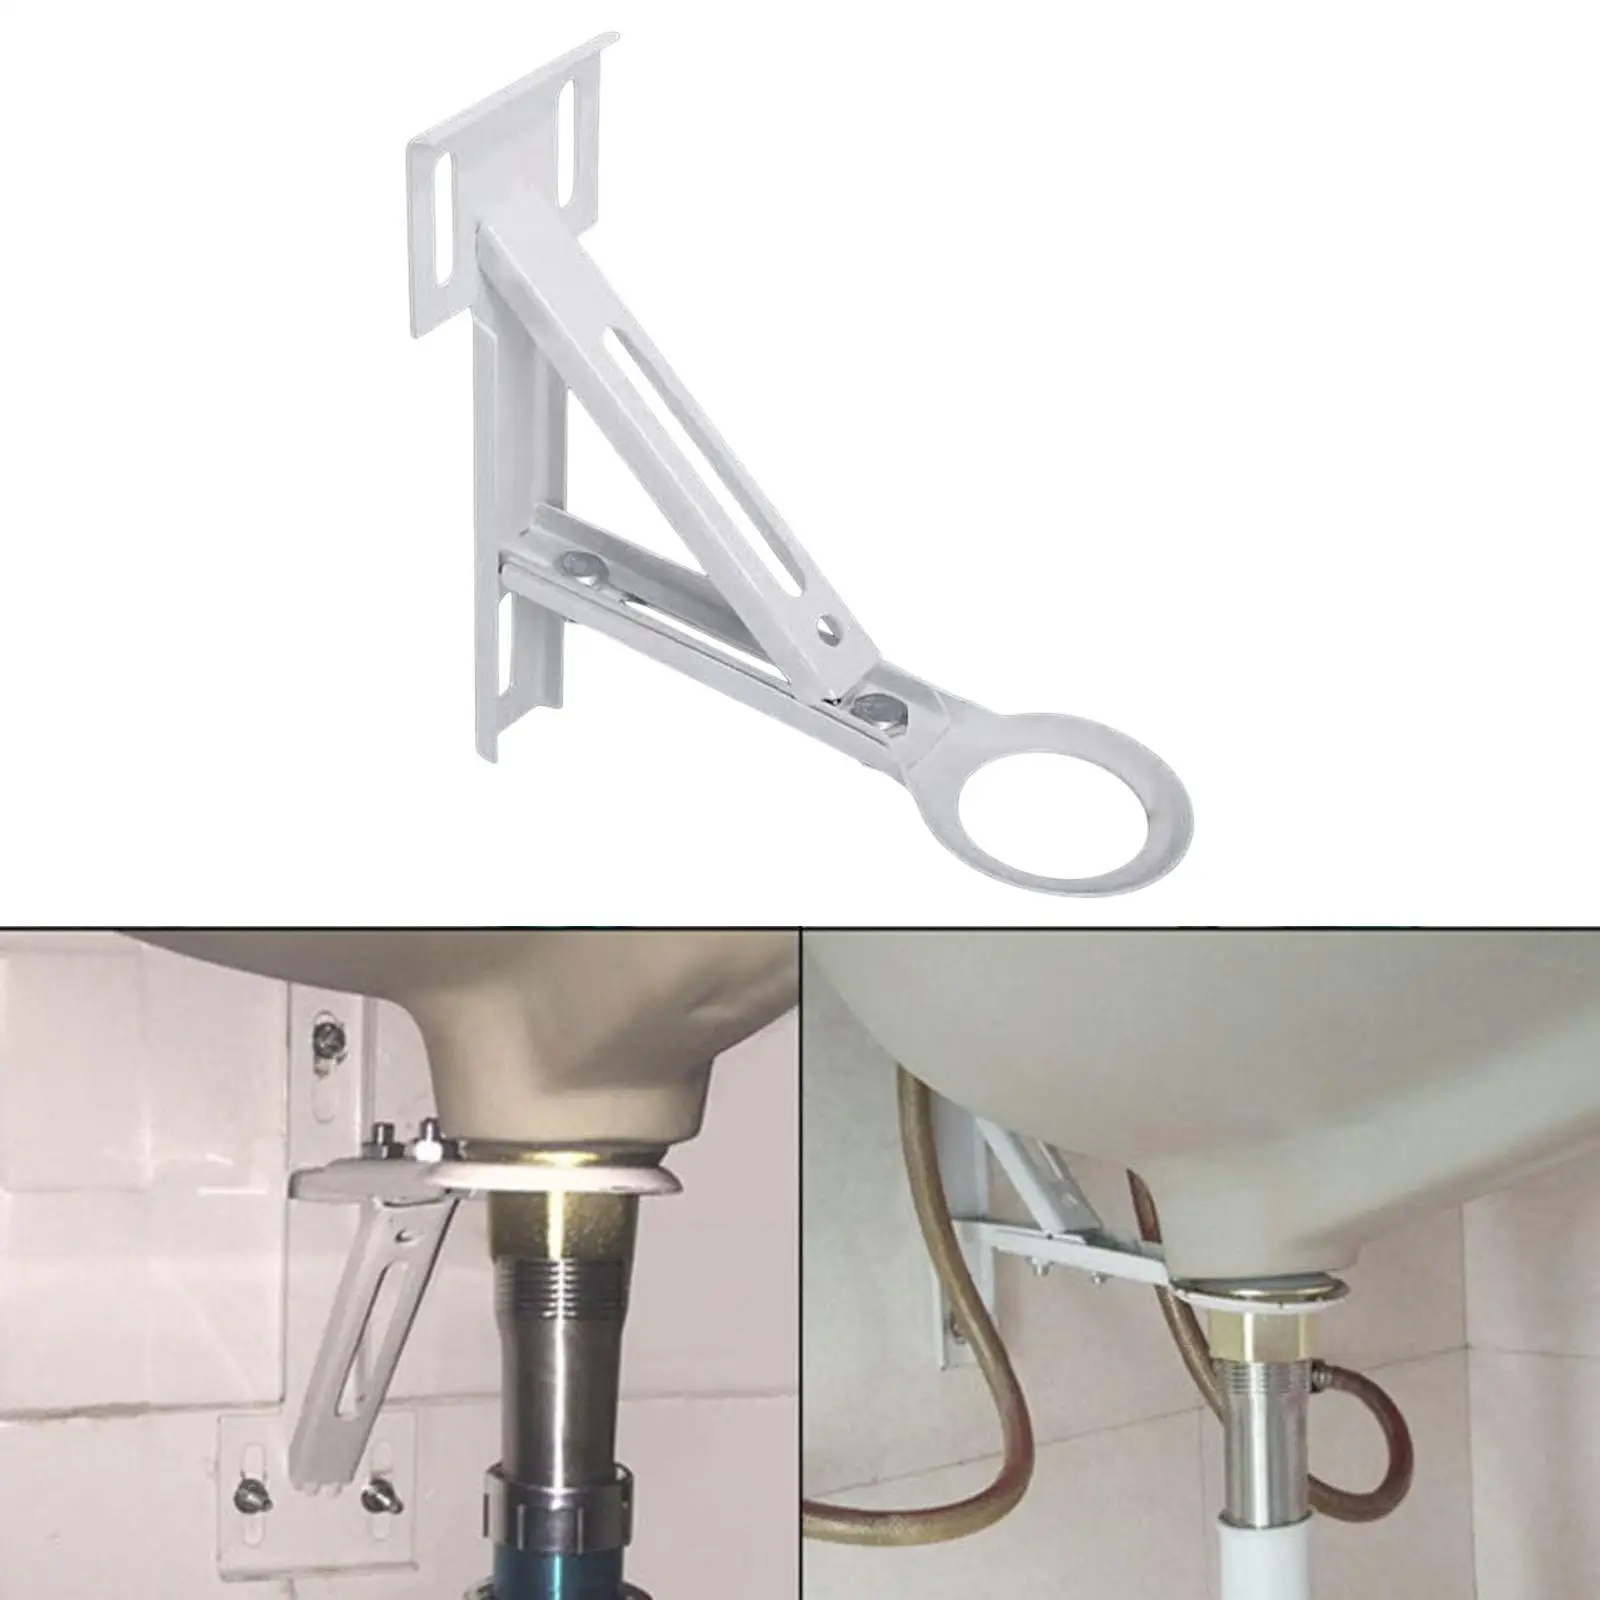 Undermount Sink Bracket Mounting Bracket Heavy Duty Adjustable for Home Use